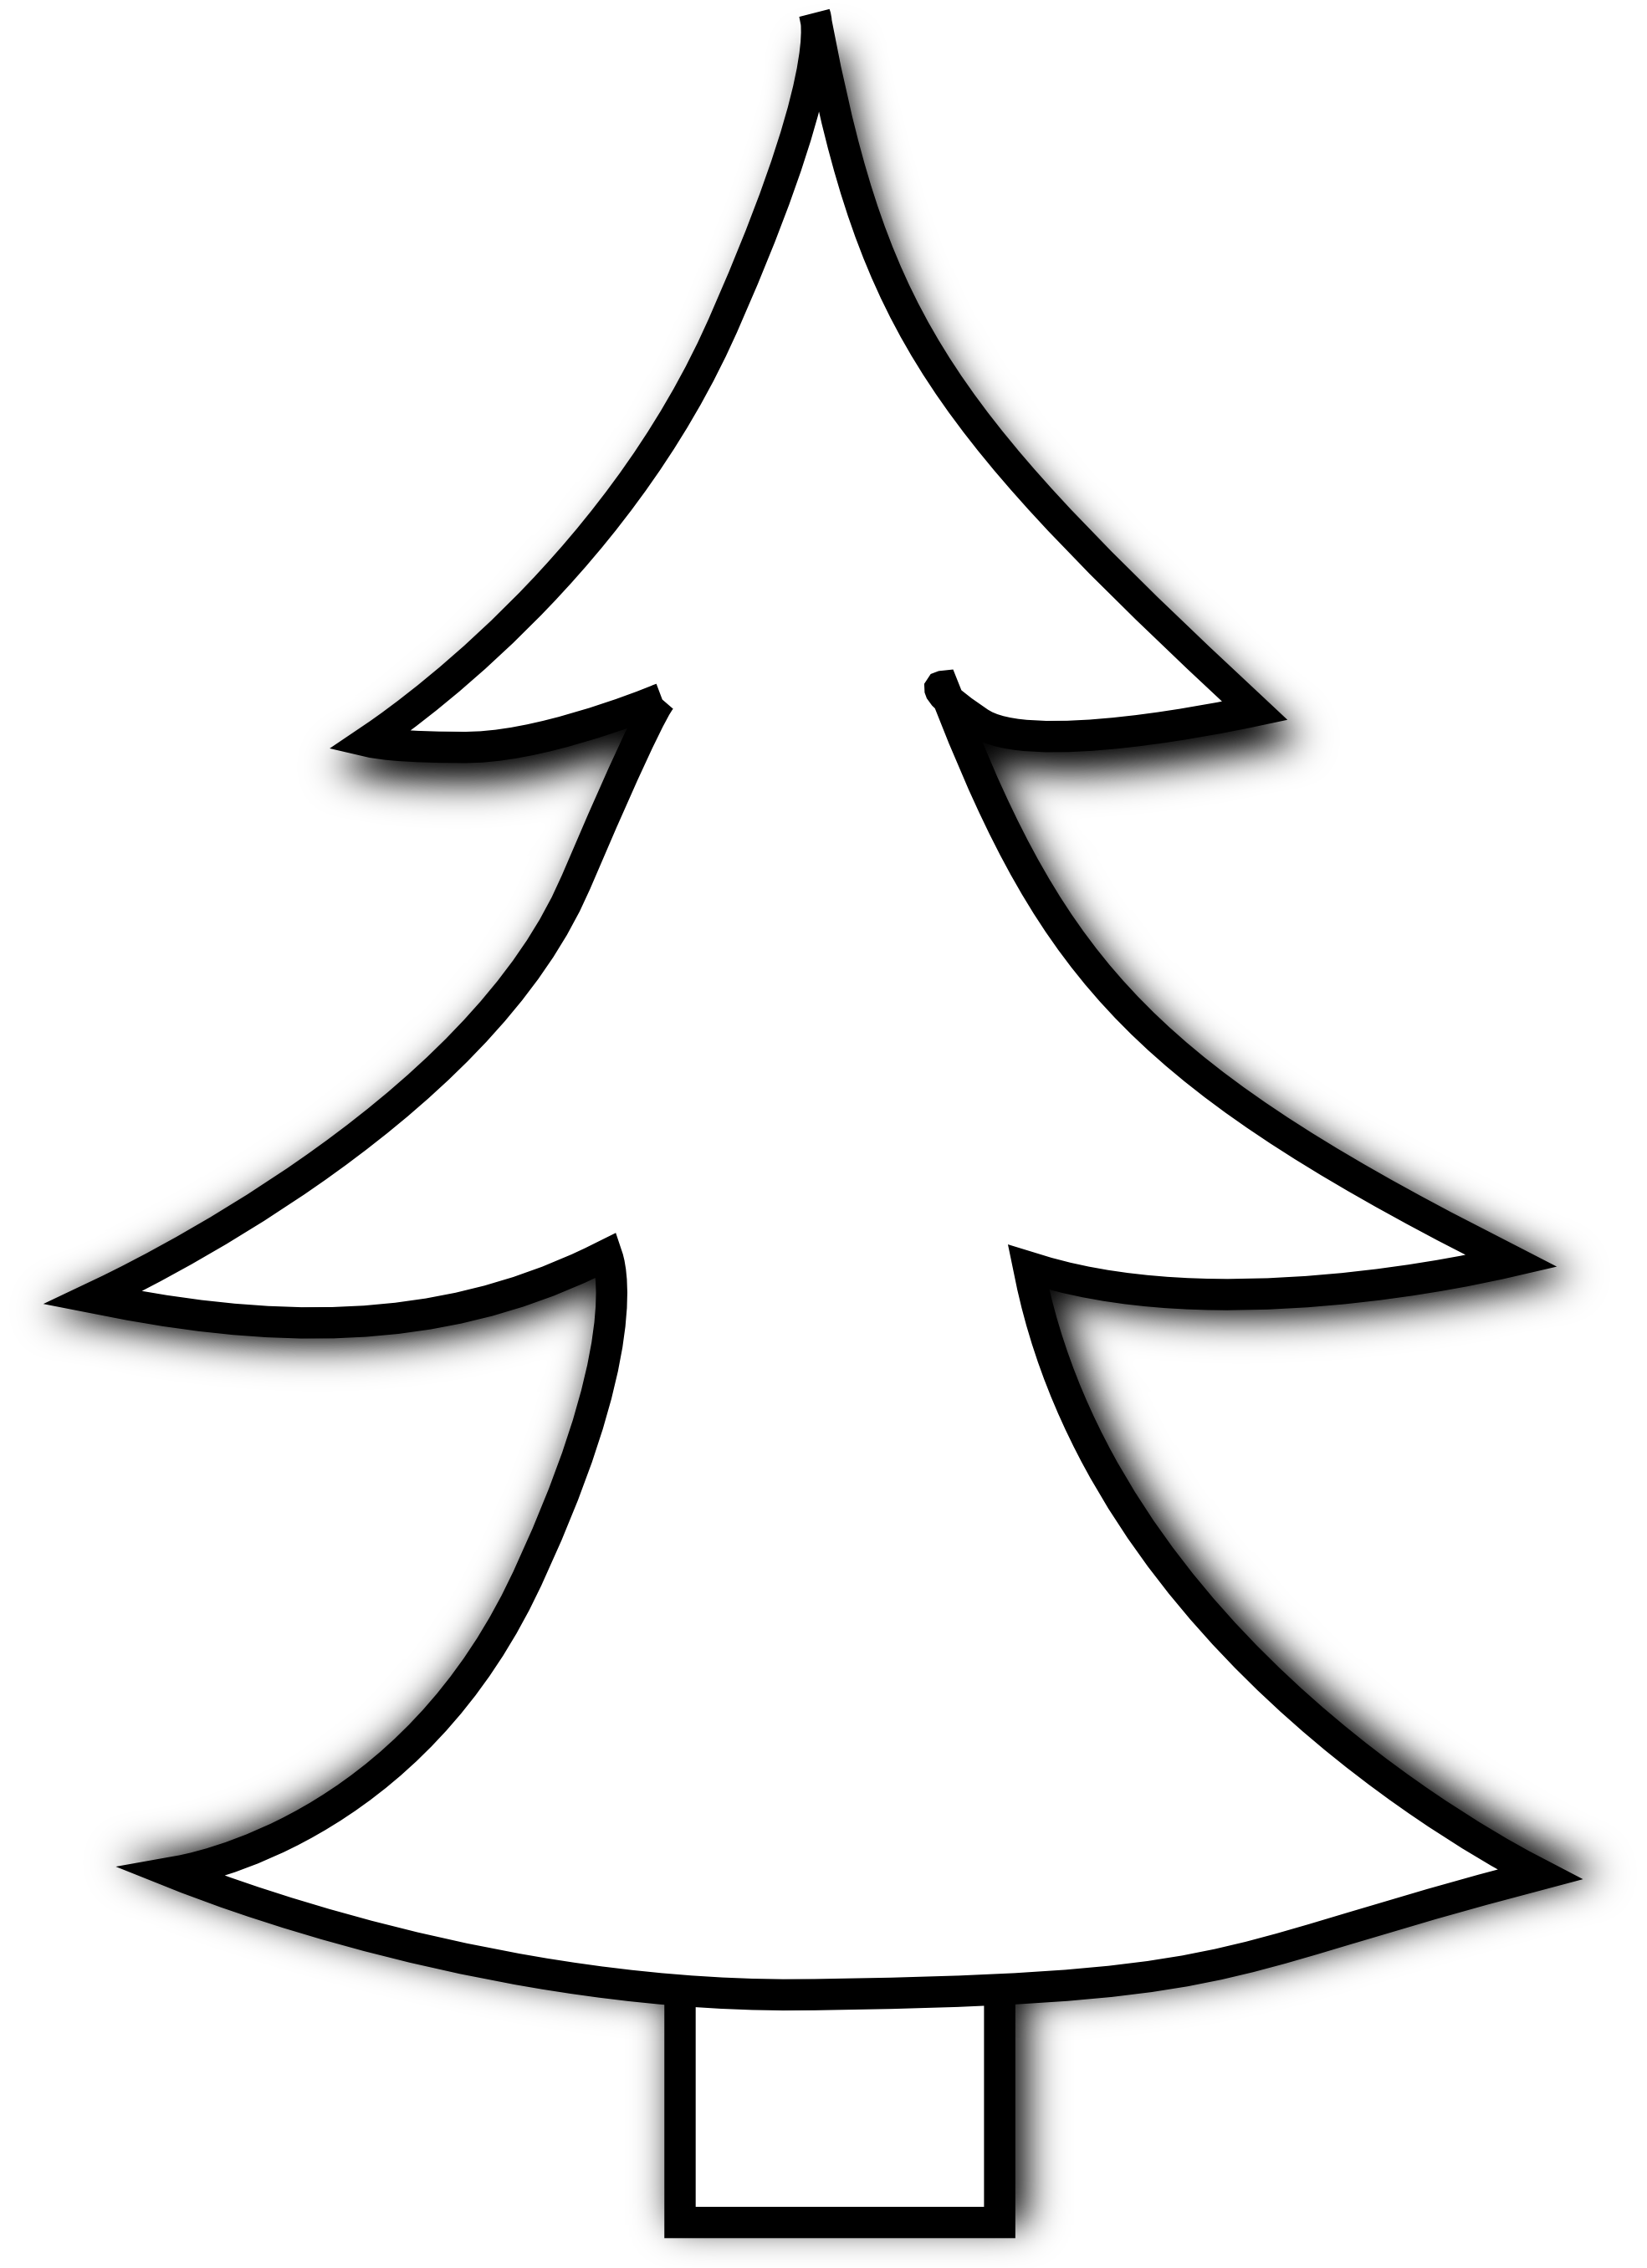 Pine Tree Clip Art Black And White 